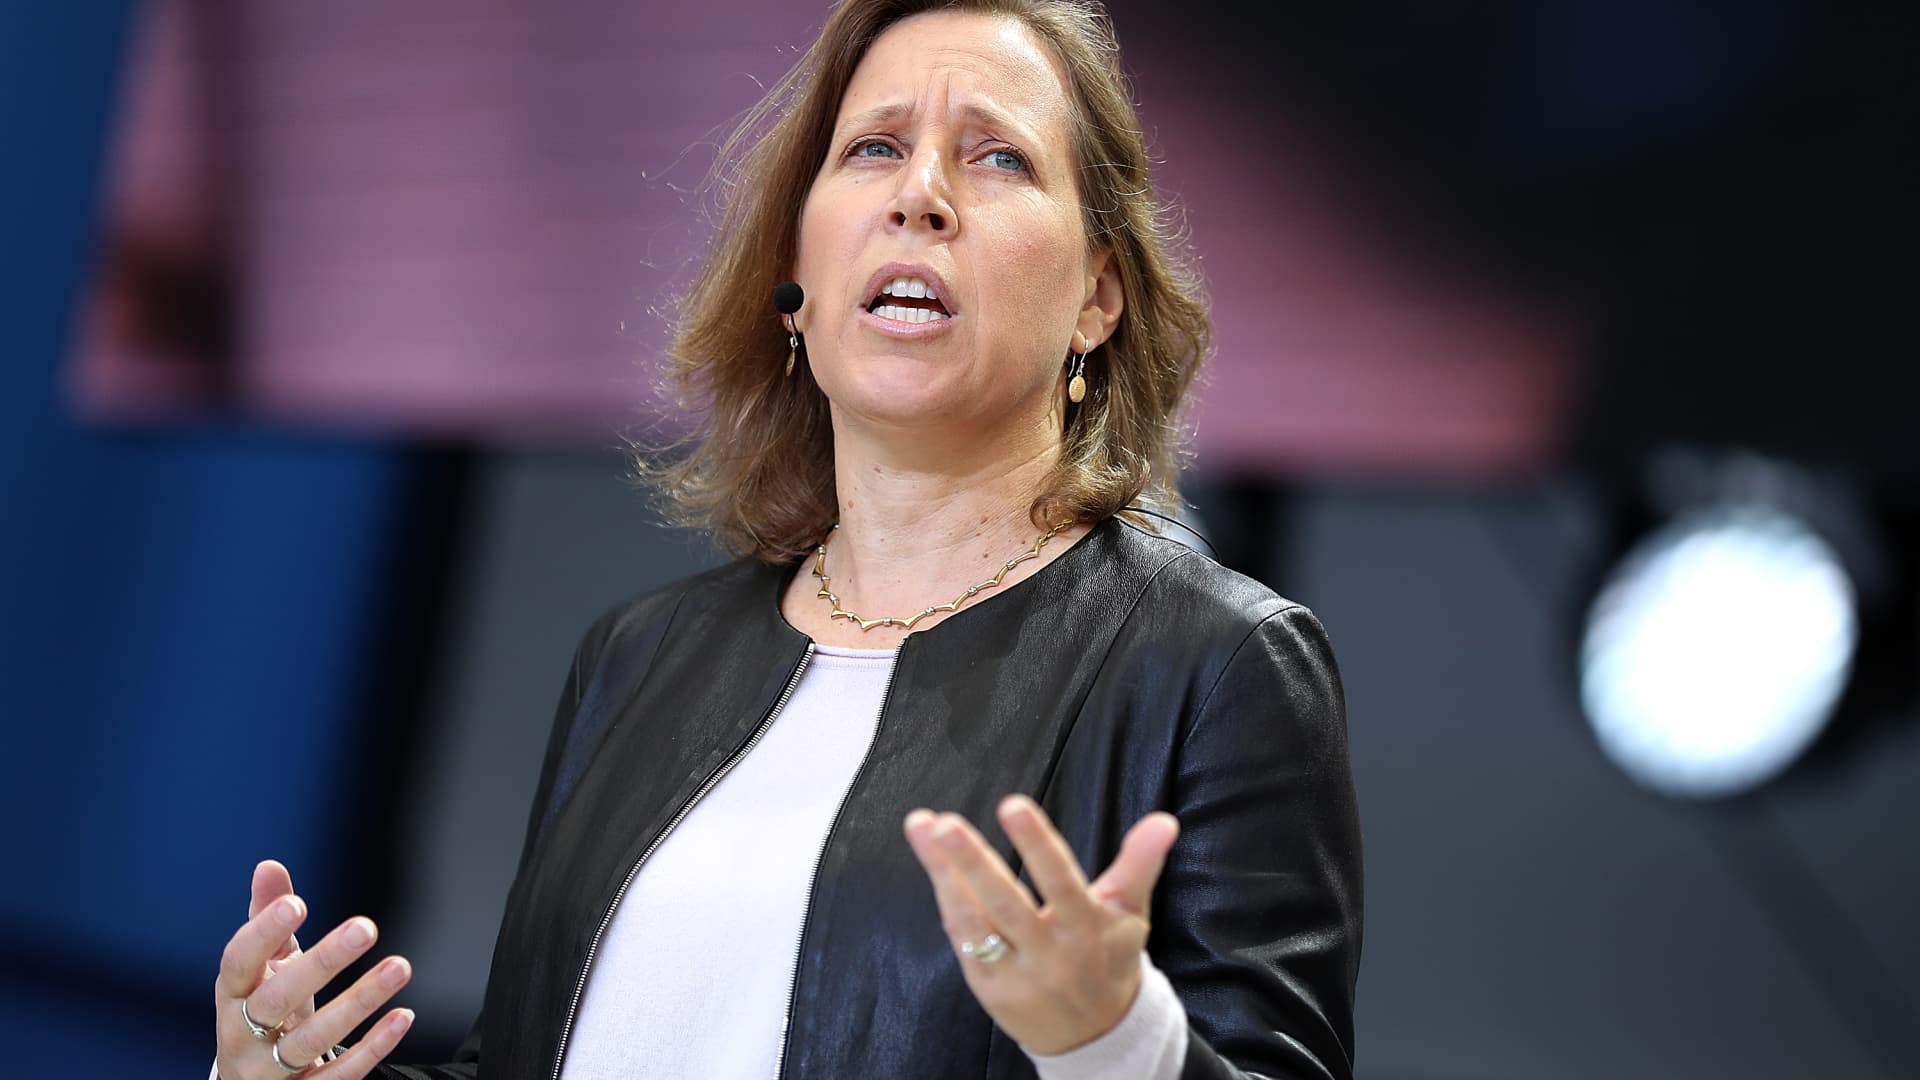 Susan Wojcicki had talks to become Tesla COO in 2014: new book